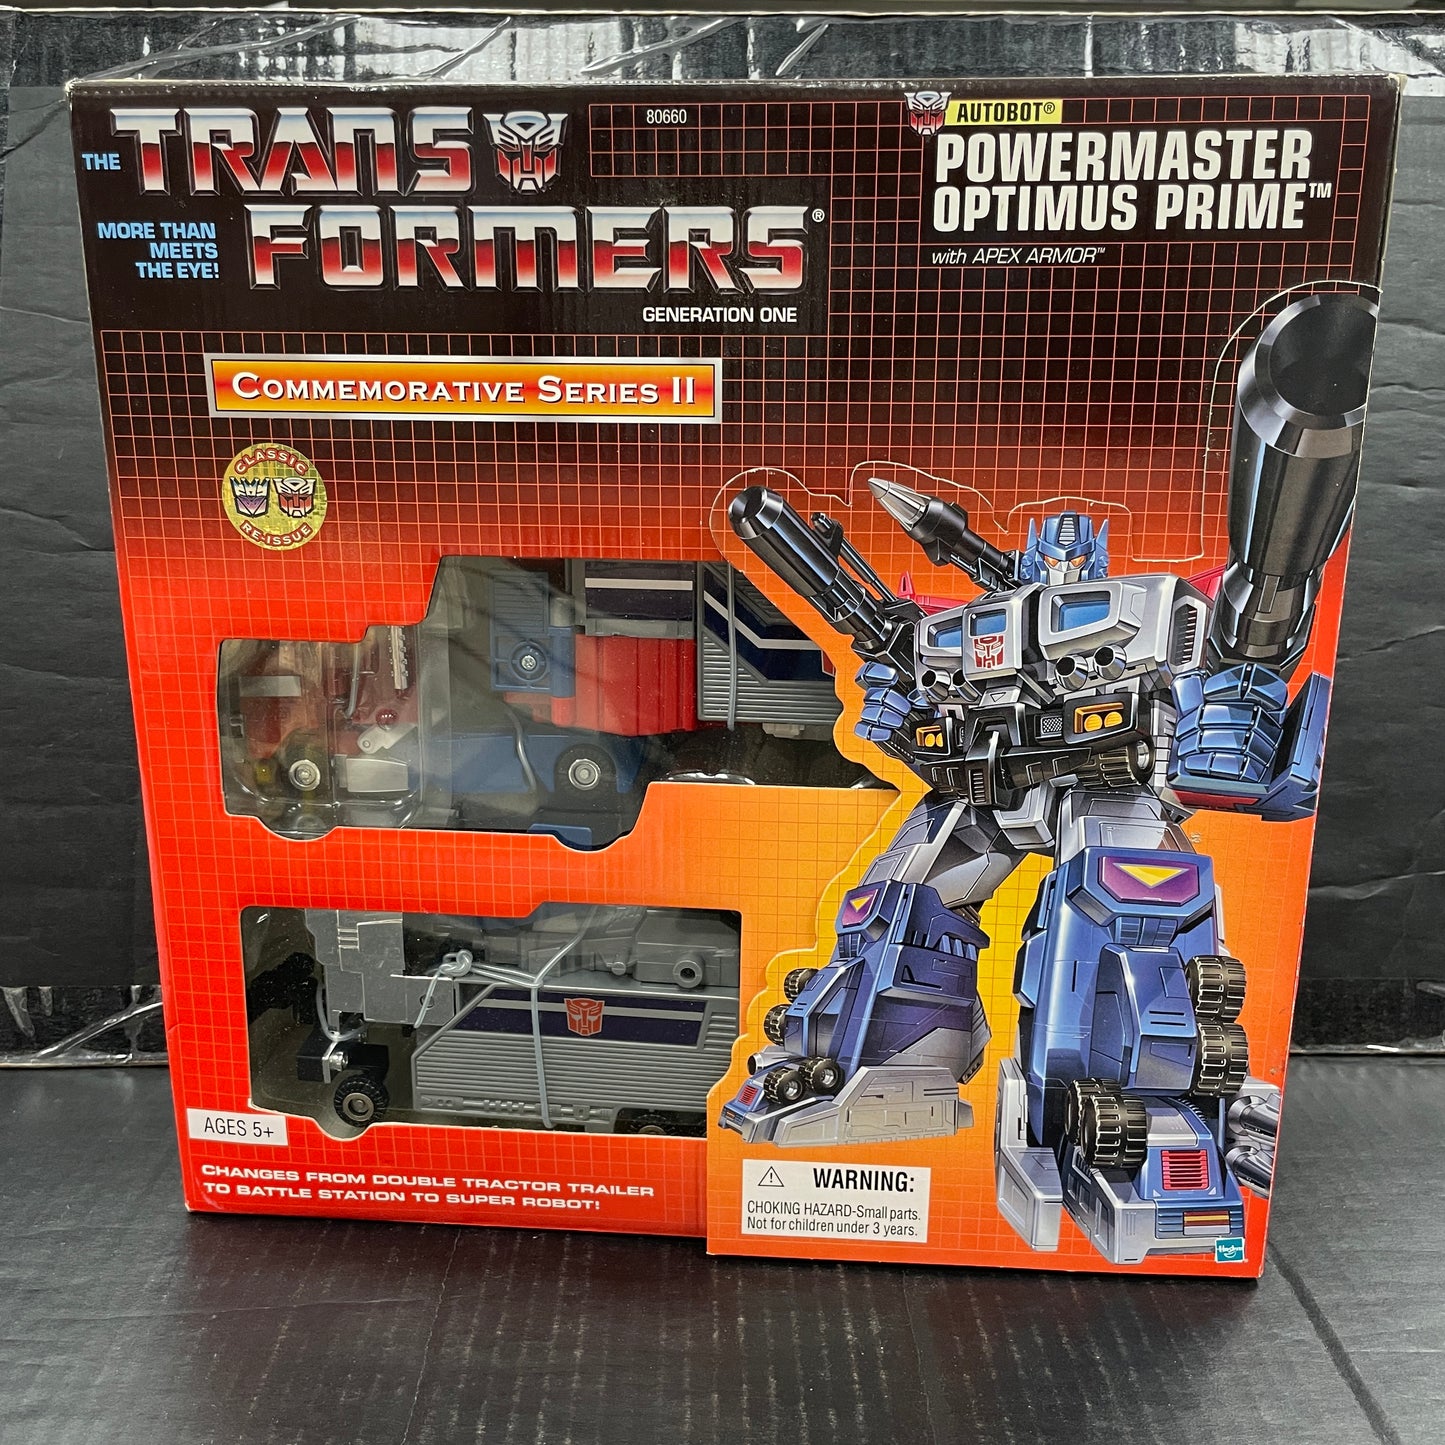 Transformers Generation One Commemorative Series II Powermaster Optimus Prime with Apex Armor 2002